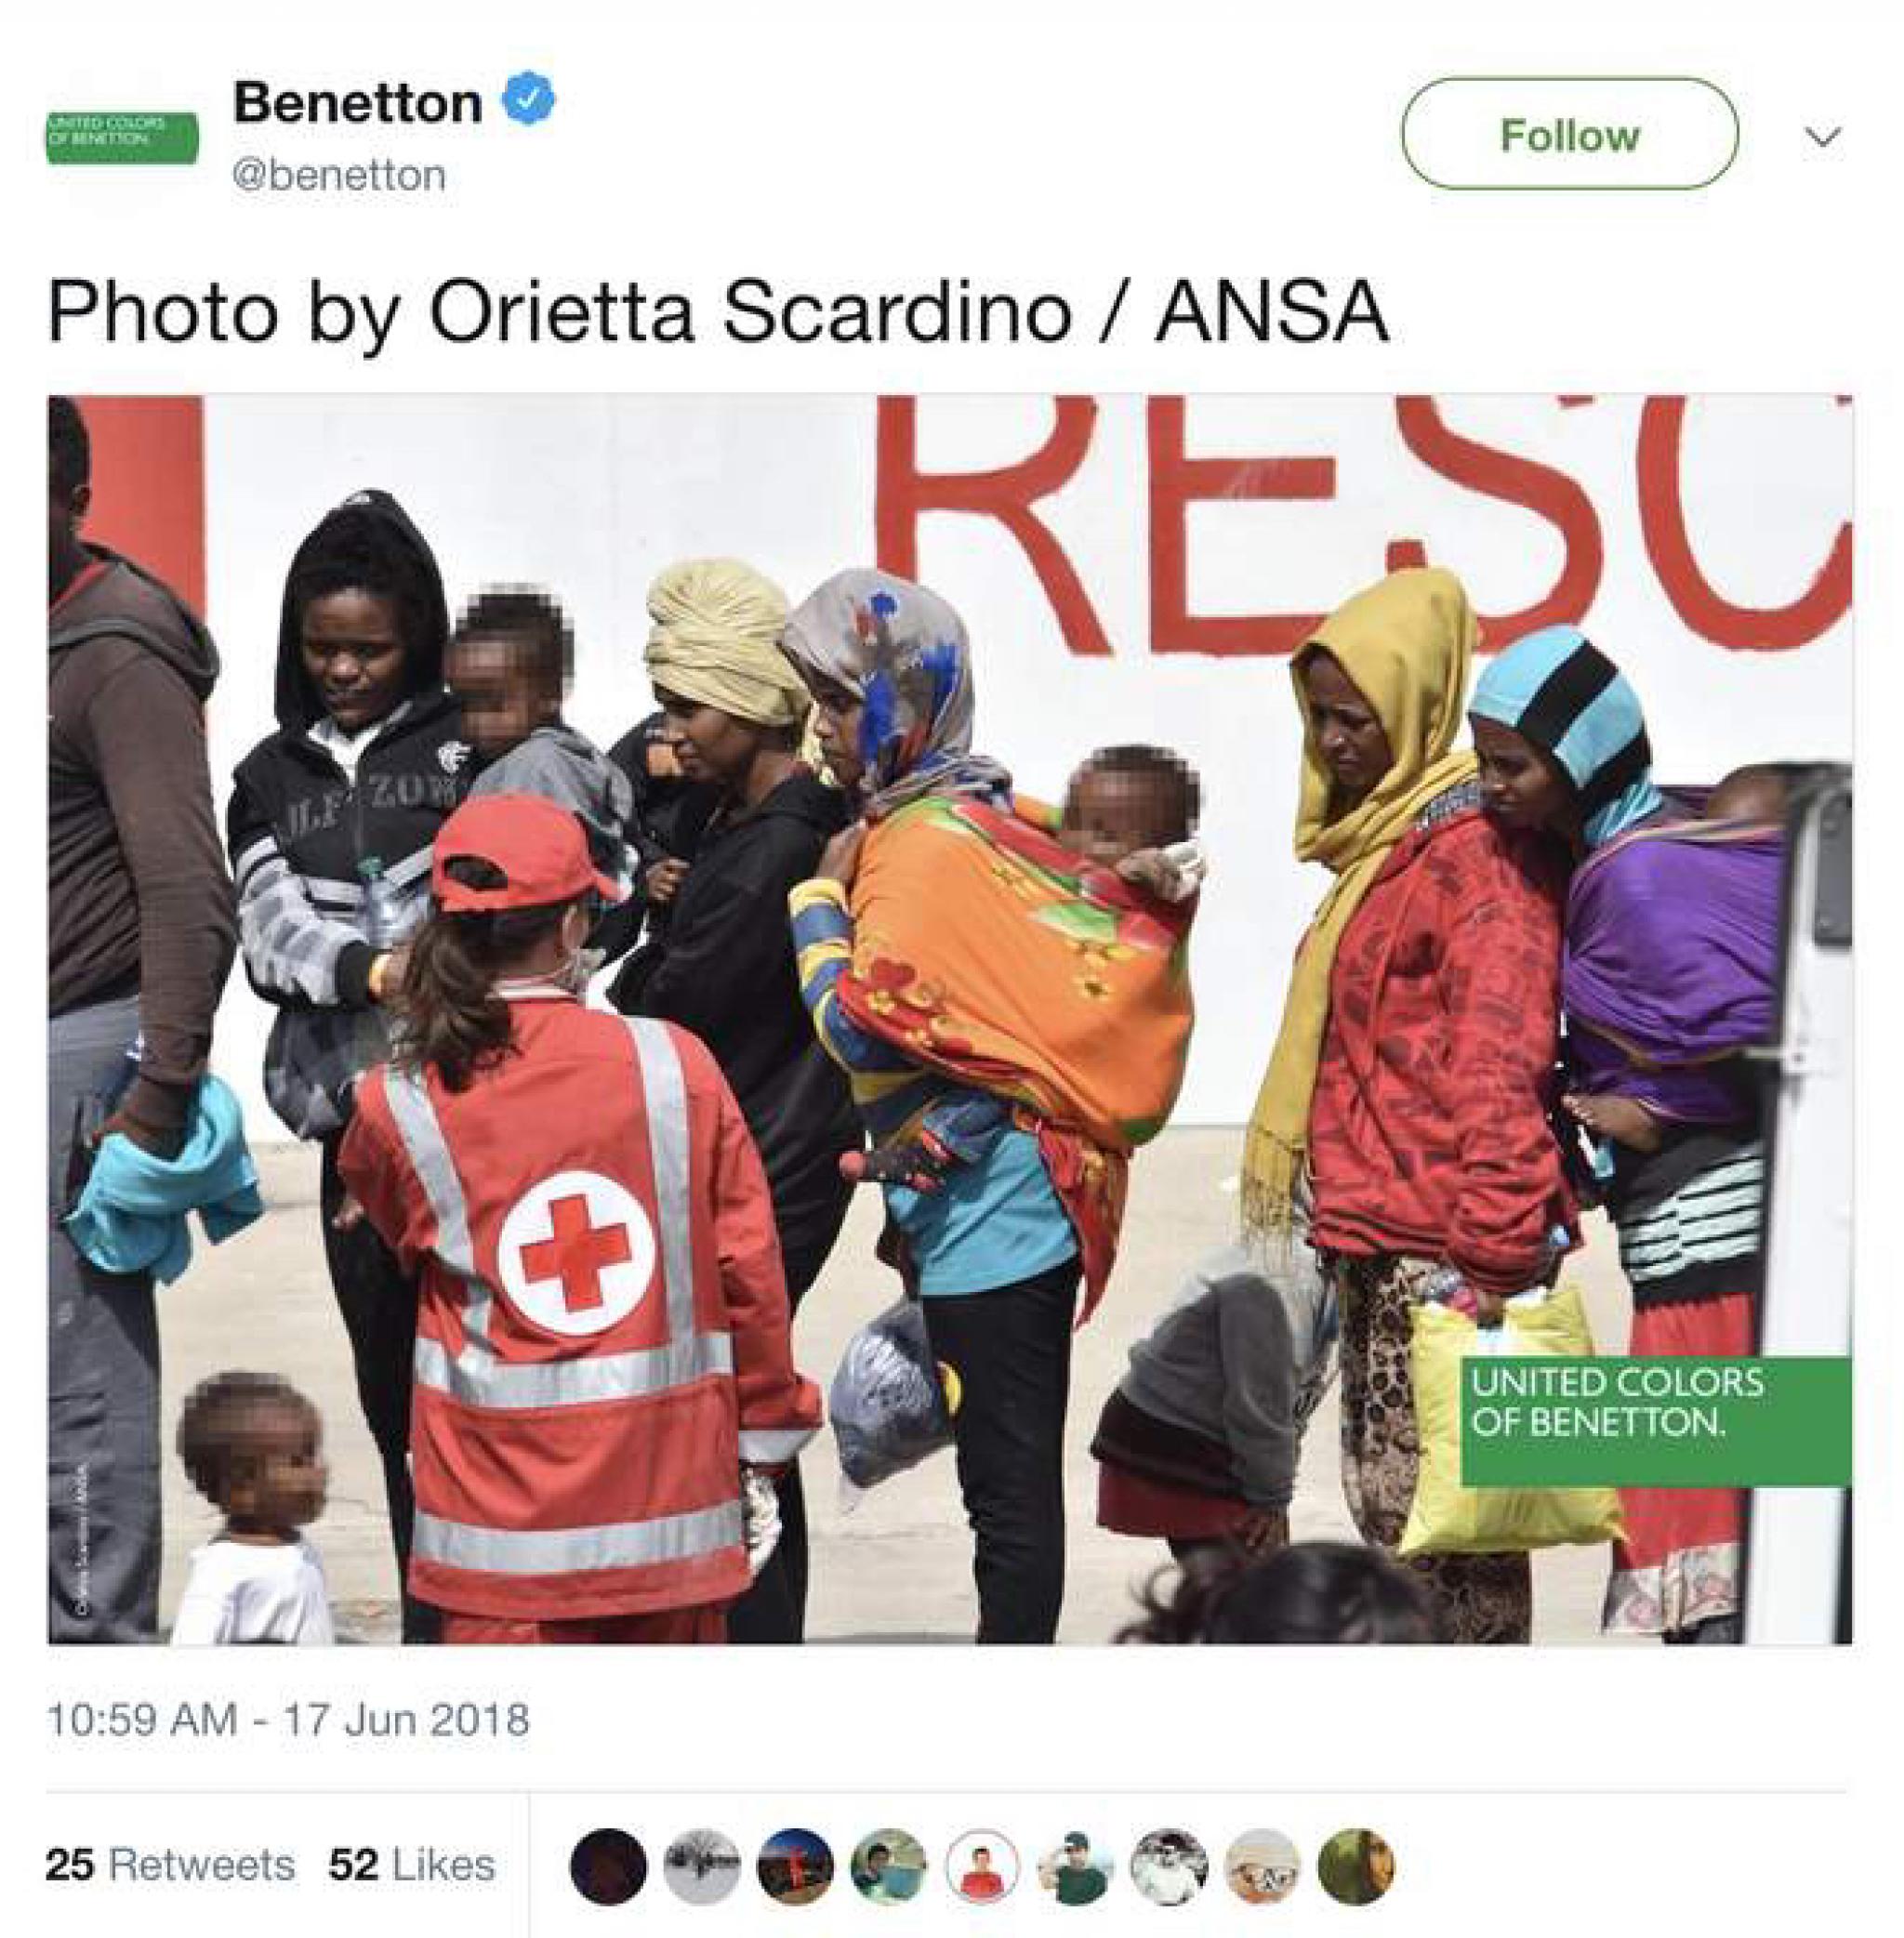 arm Autonoom Duplicaat Photos of refugees advertise Benetton